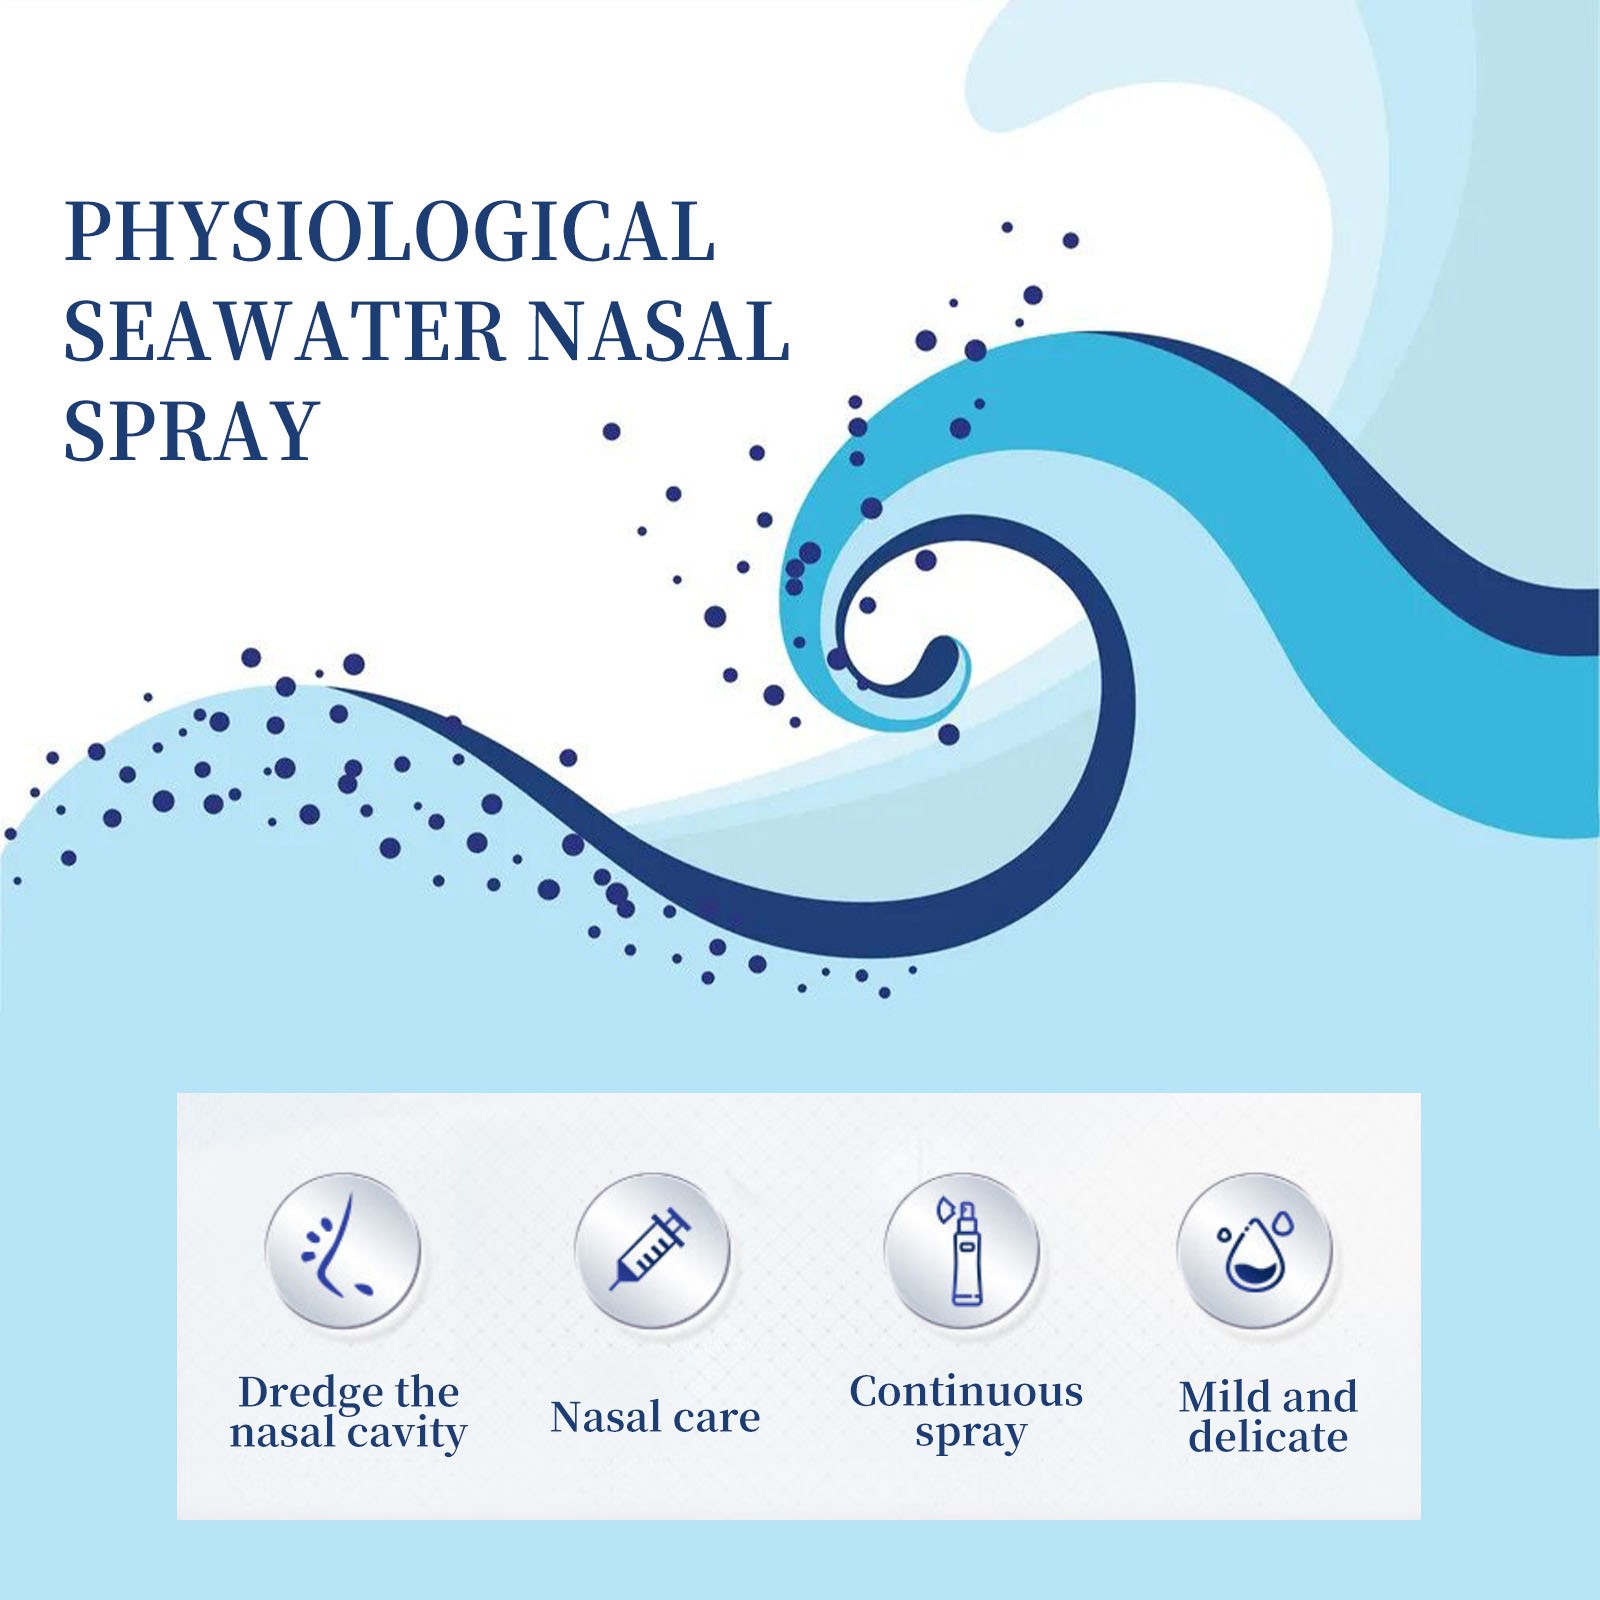 Saline Nasal Moisturizing Spray Seawater Nasal Spray Mitigate Nighttime Stuffiness Great For Air Travel Dry 30ML - image 5 of 6